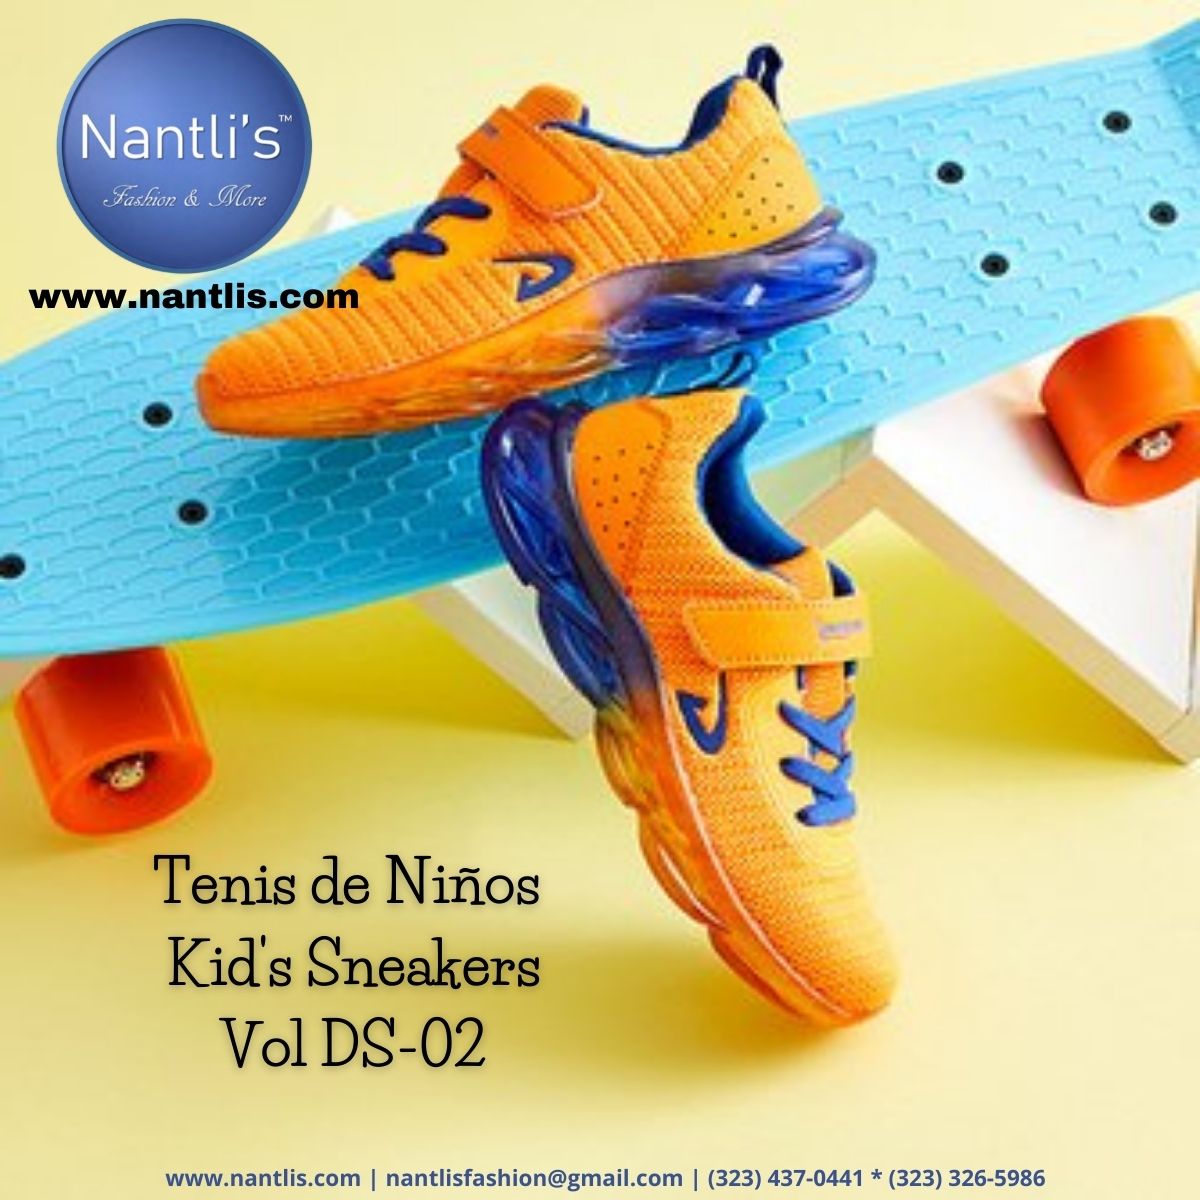 Nantlis Vol DS-02 Zapatos Tenis para Ninos Mayoreo Catalogo Wholesale Kids sneakers tennis shoes_Page_01